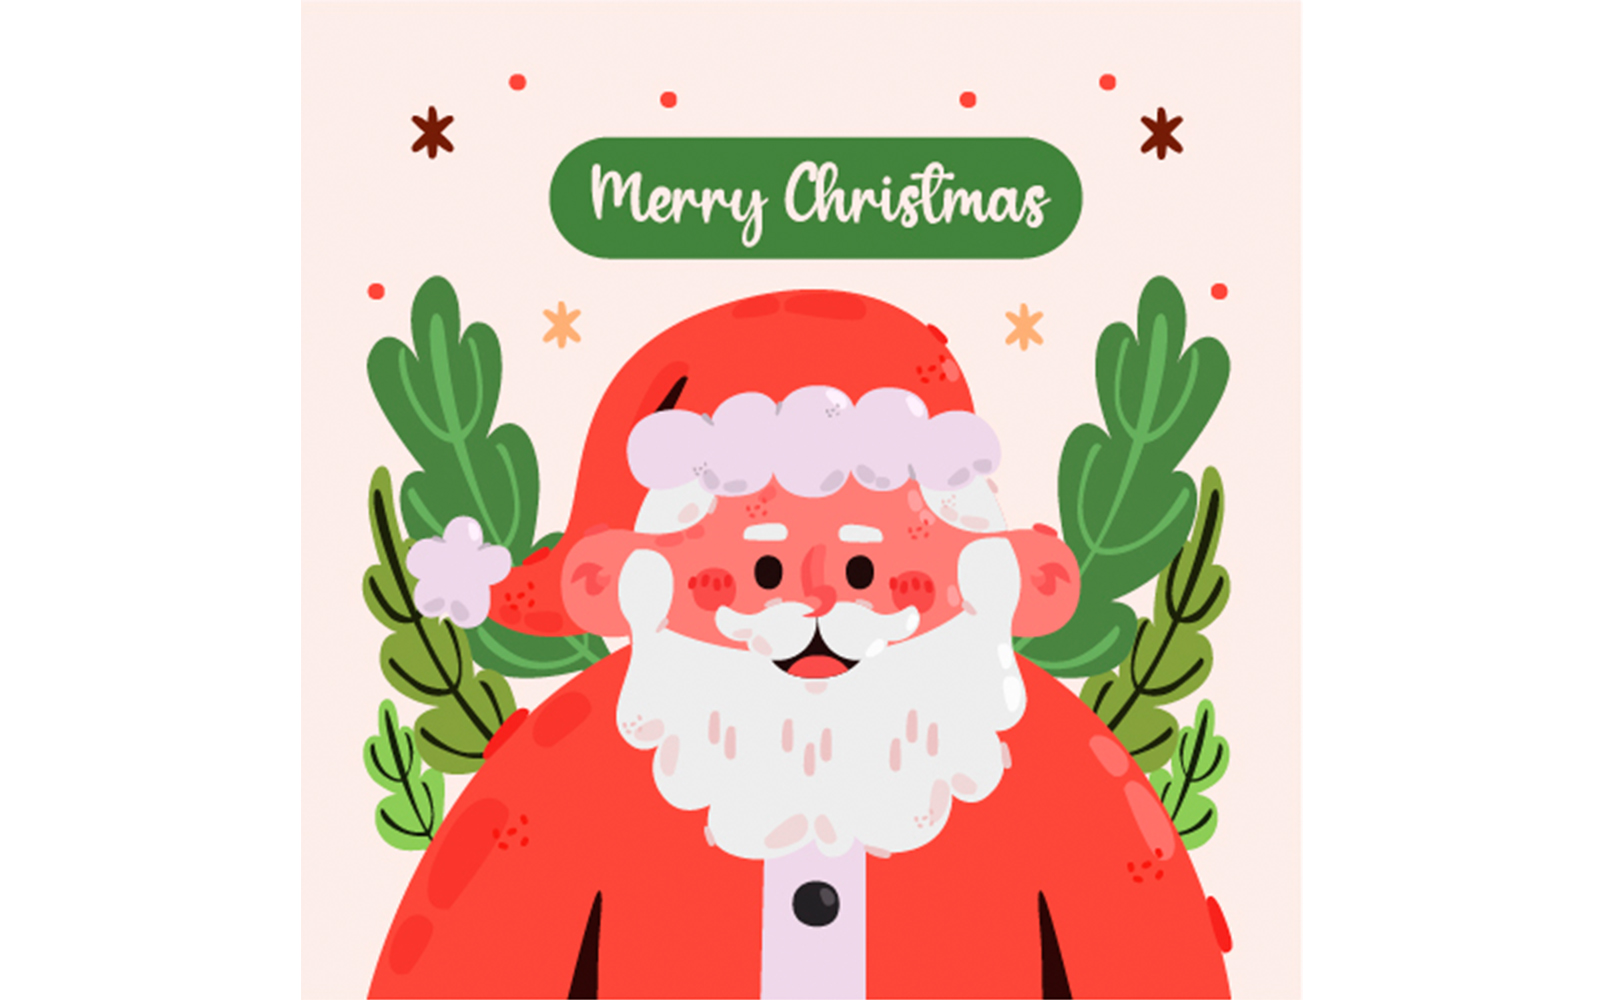 Merry Christmas Greeting with Santa Illustration